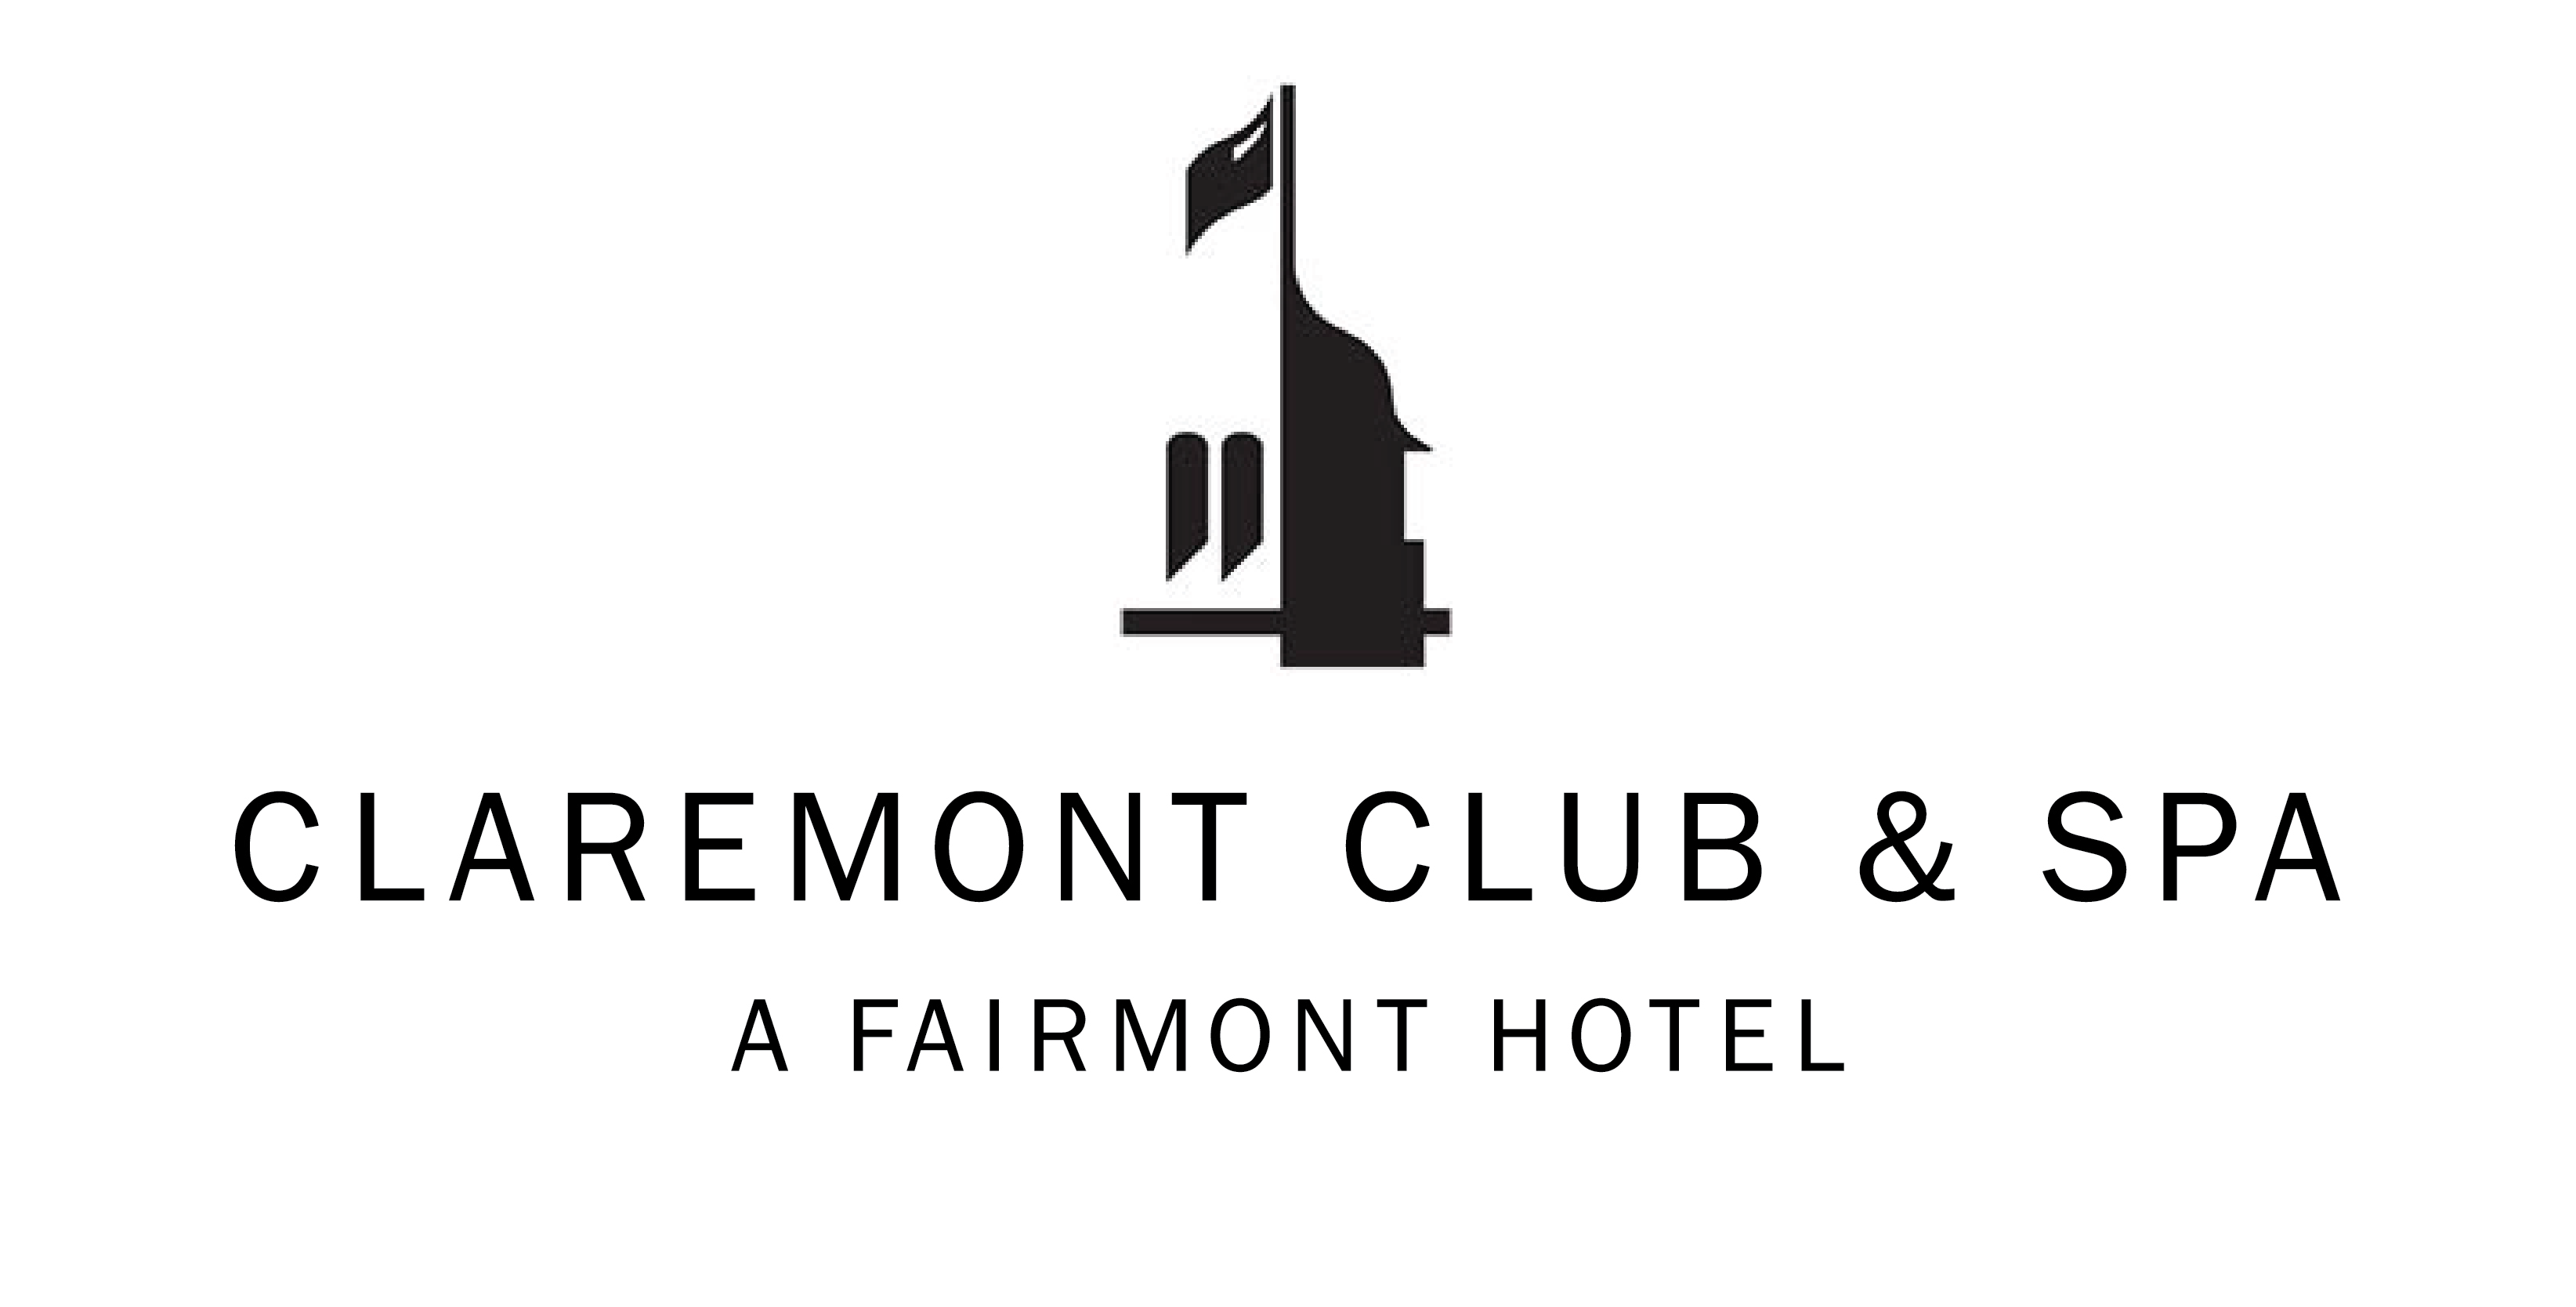 Claremont Club & Spa